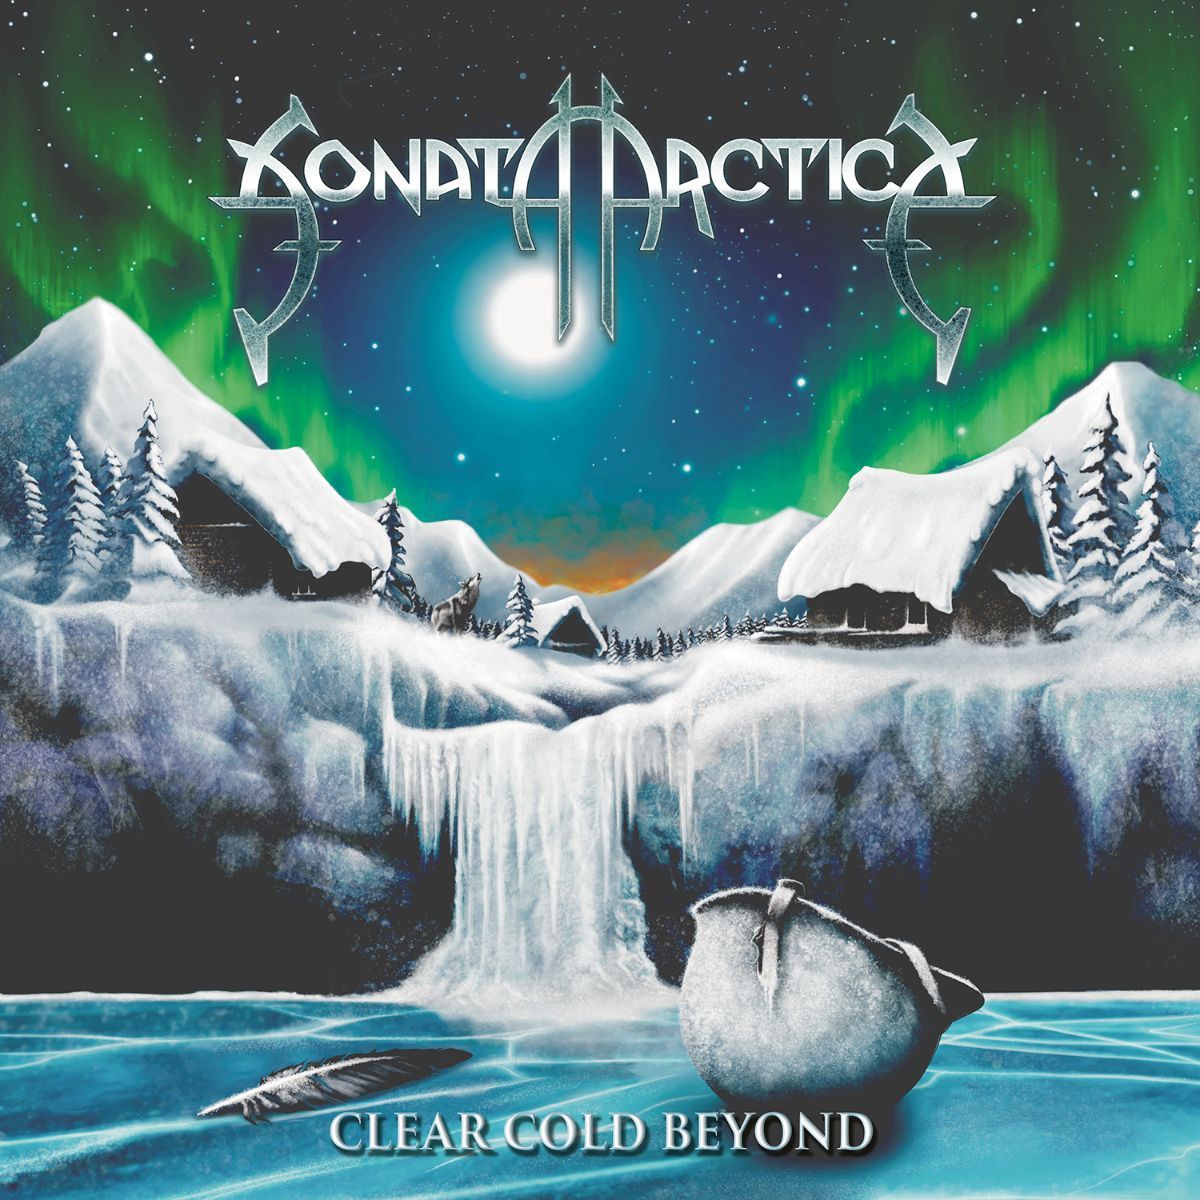 Sonata Arctica - "Clear Cold Beyond"